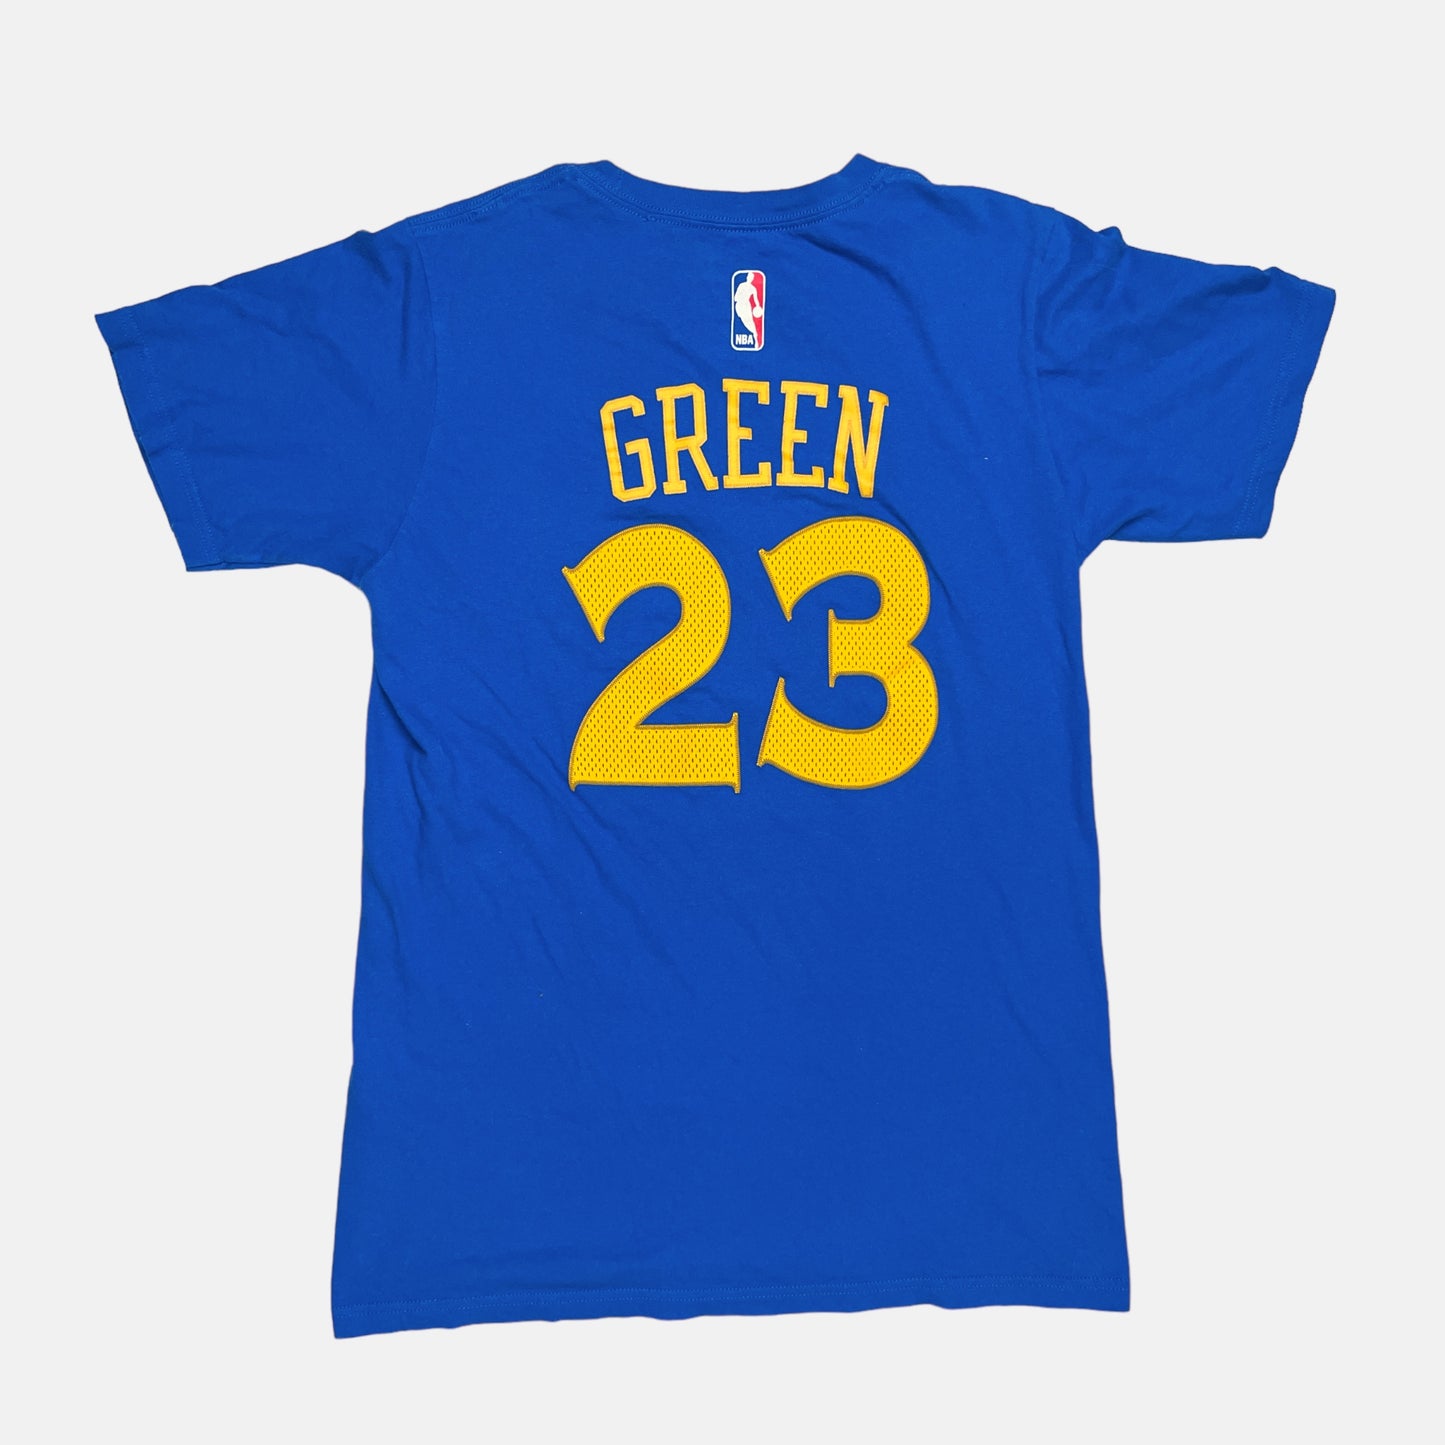 Golden State Warriors - Draymond Green - Größe S - Adidas - NBA Name and Number Shirt